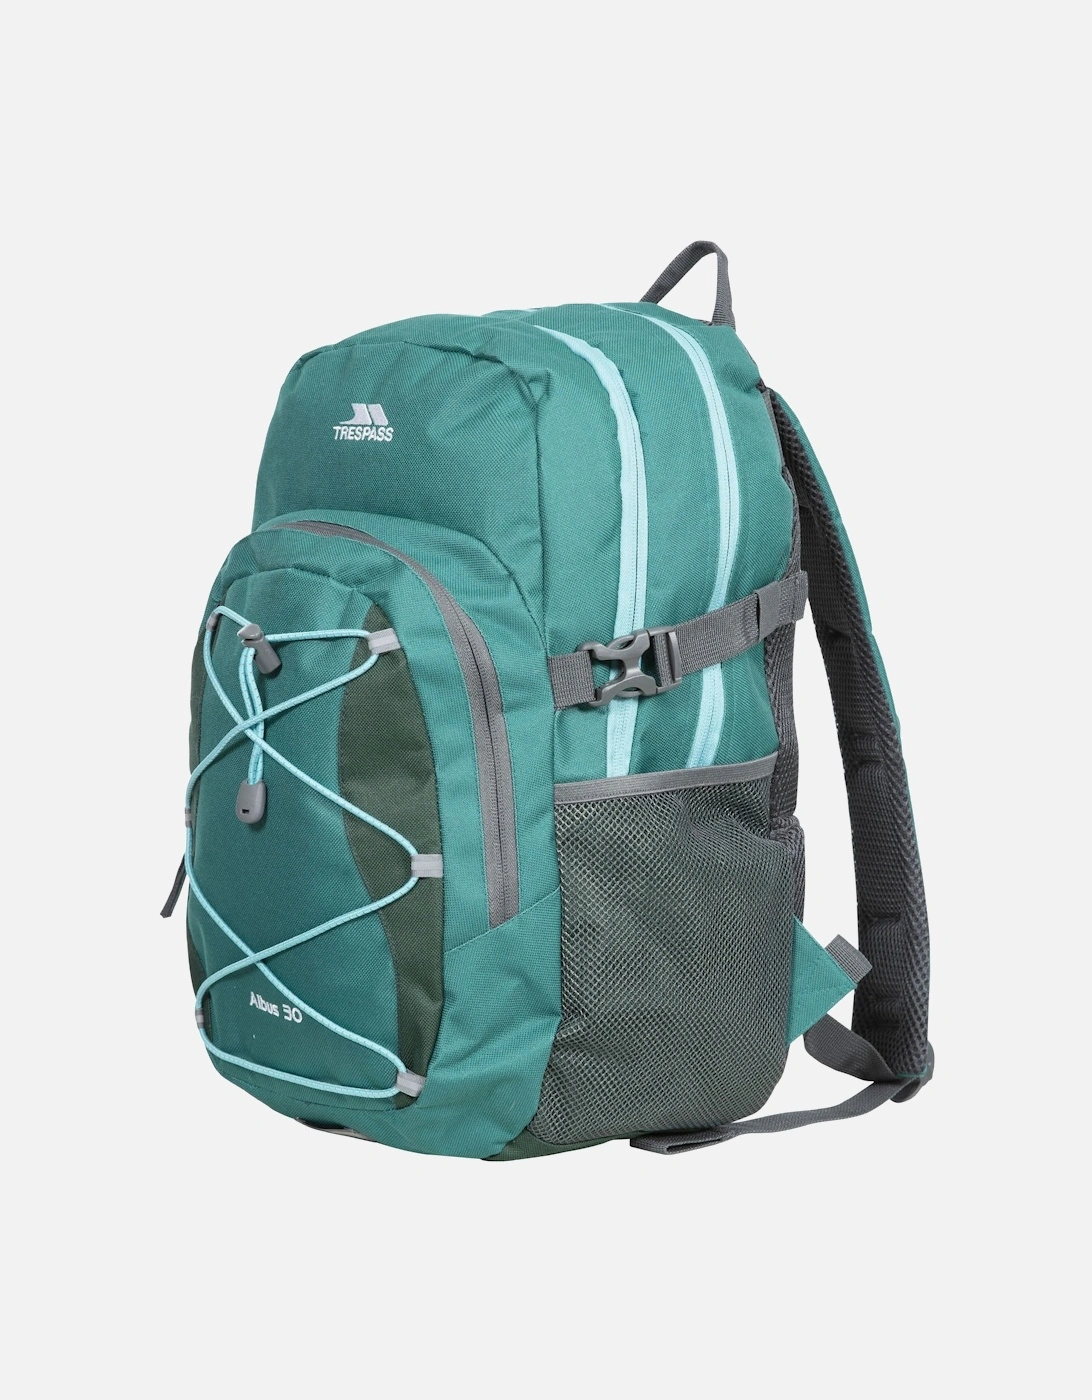 Unisex Albus Multi-Function Adventure Backpack, 56 of 55